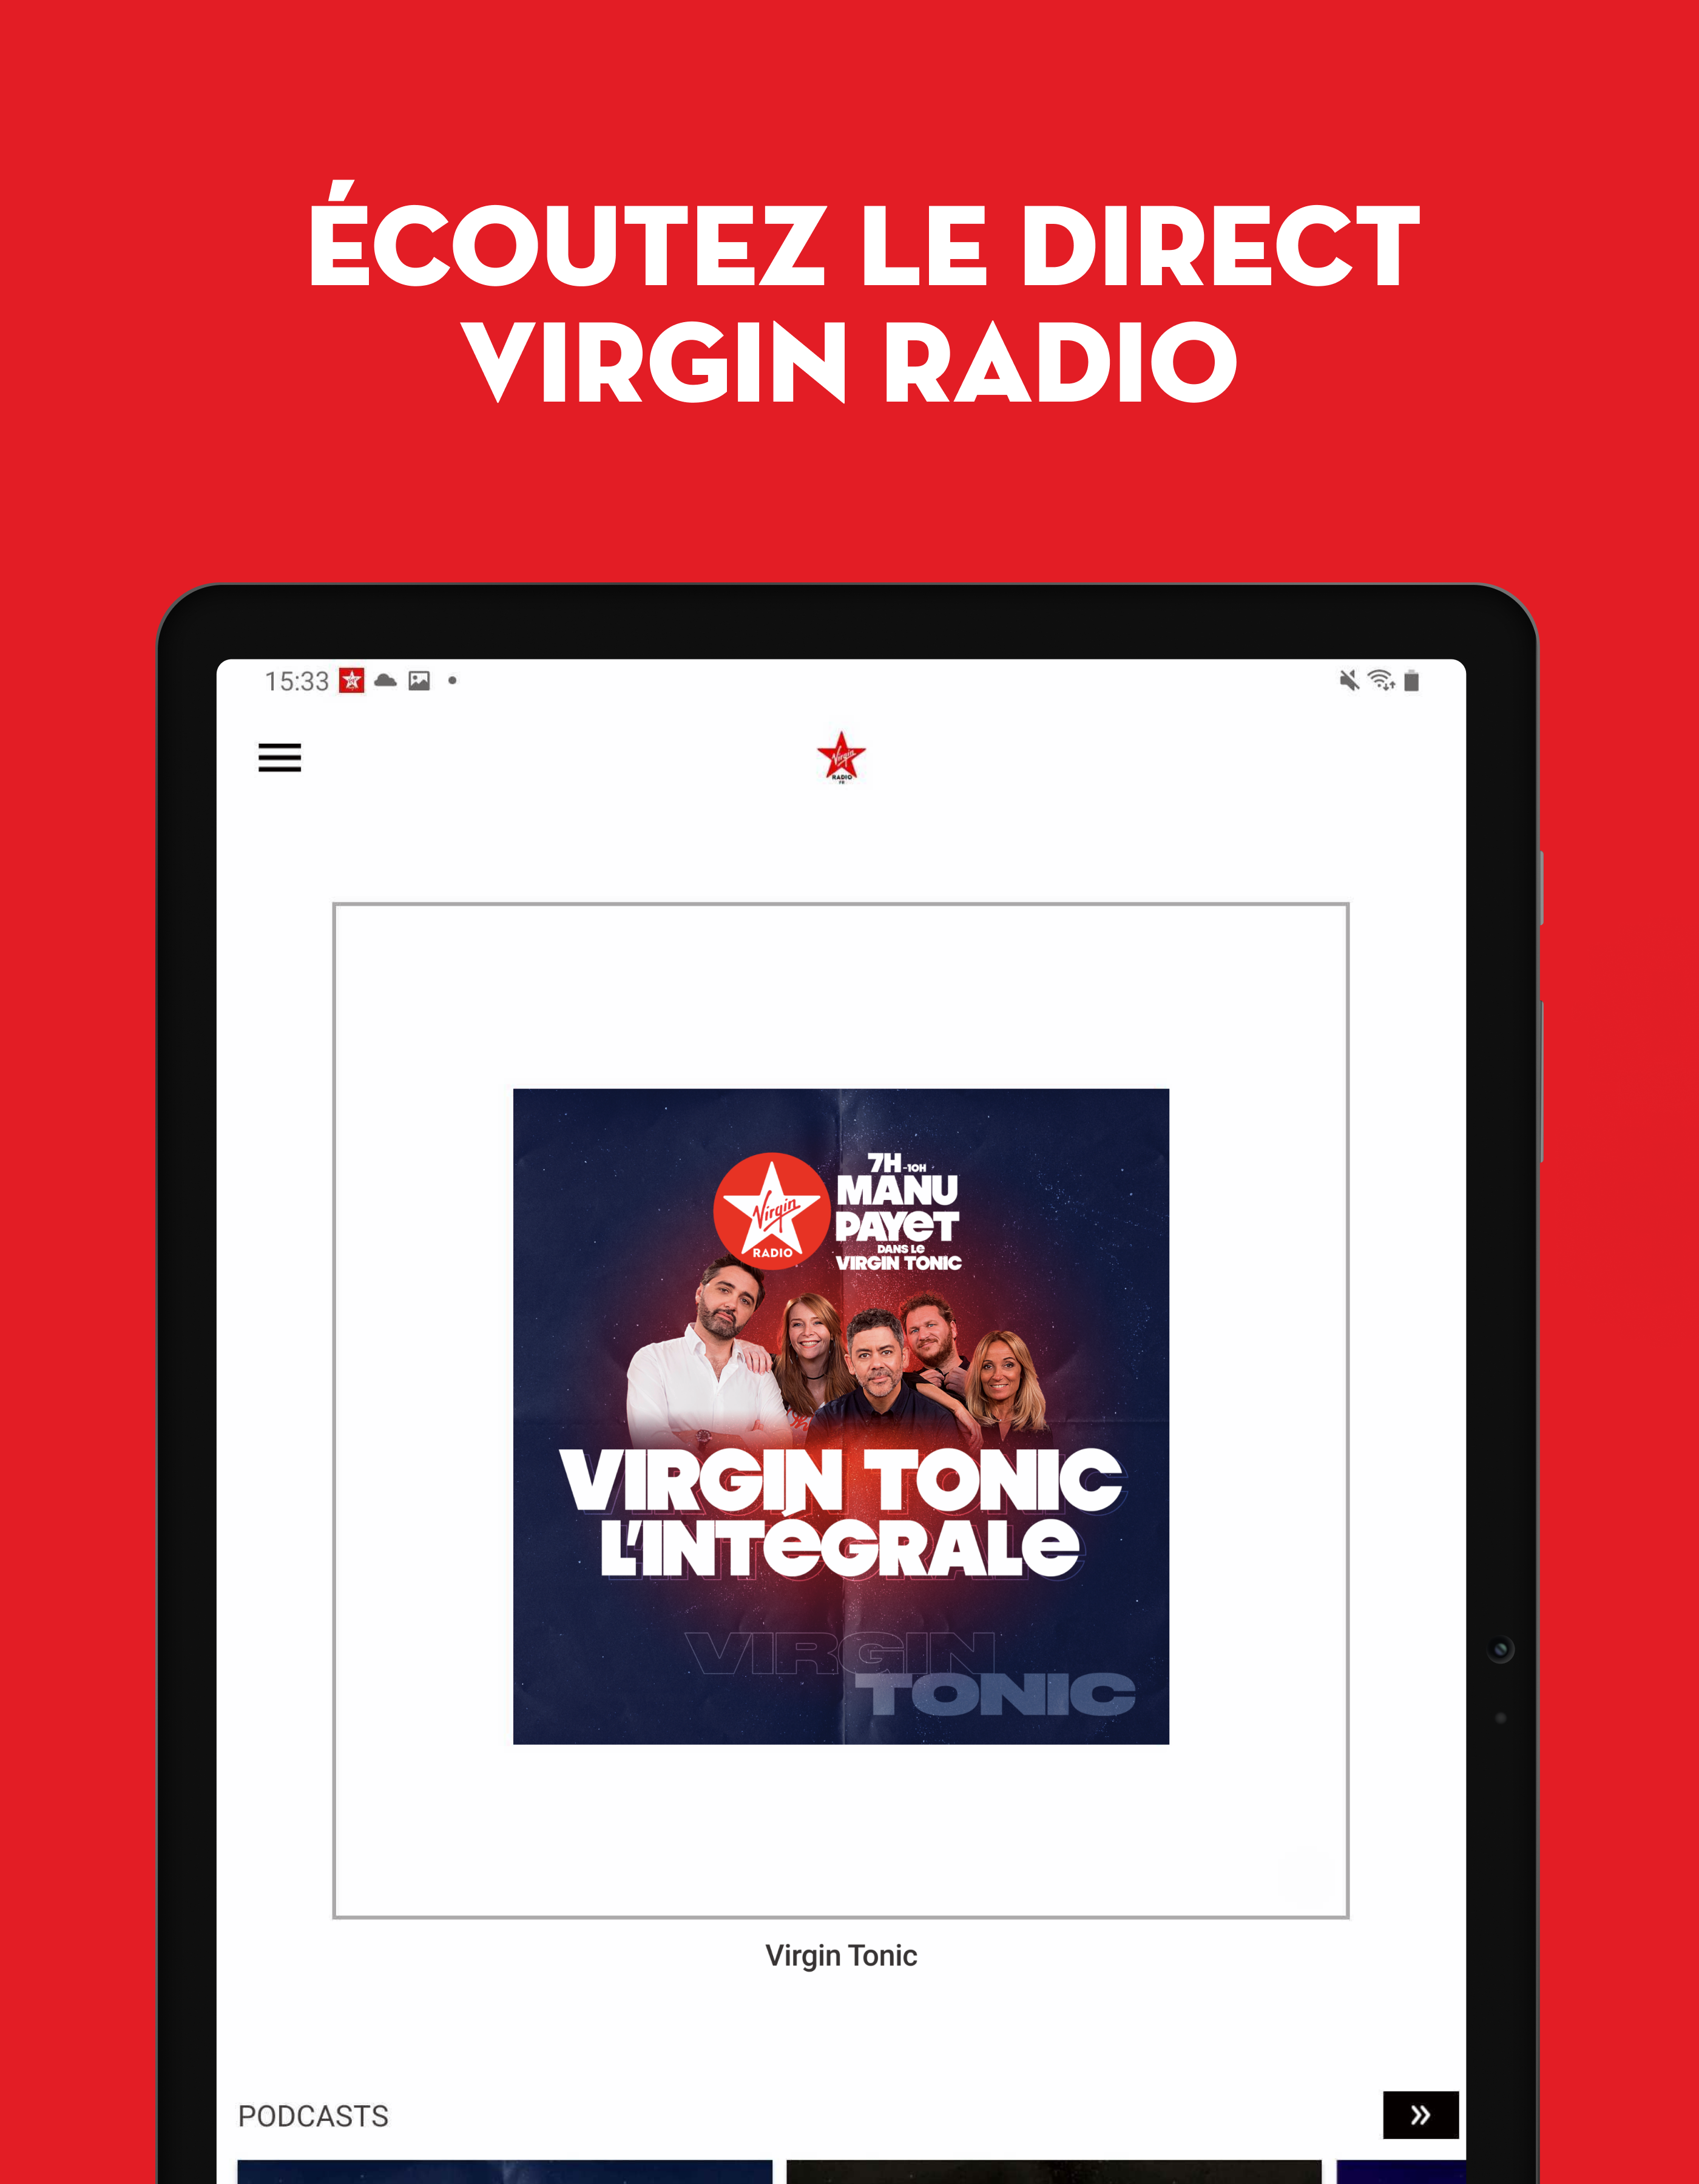 Virgin Radio Fr APK 20.5.454.0 for Android – Download Virgin Radio Fr APK  Latest Version from APKFab.com